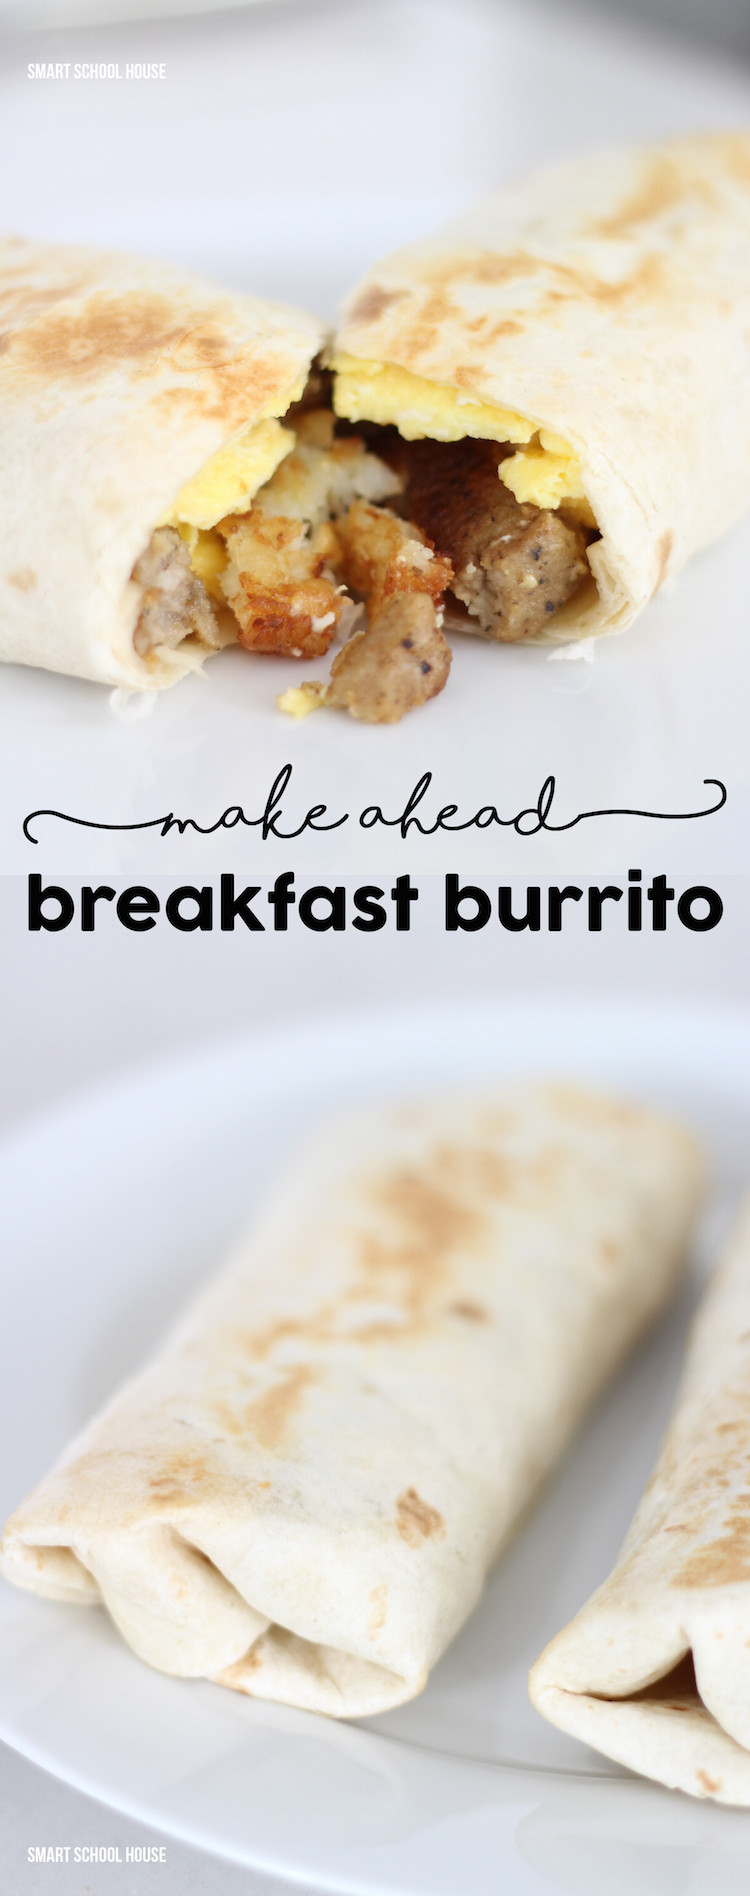 Make Ahead Breakfast Burritos With Hash Browns
 Make Ahead Sausage Hash Brown Burrito Page 2 of 2